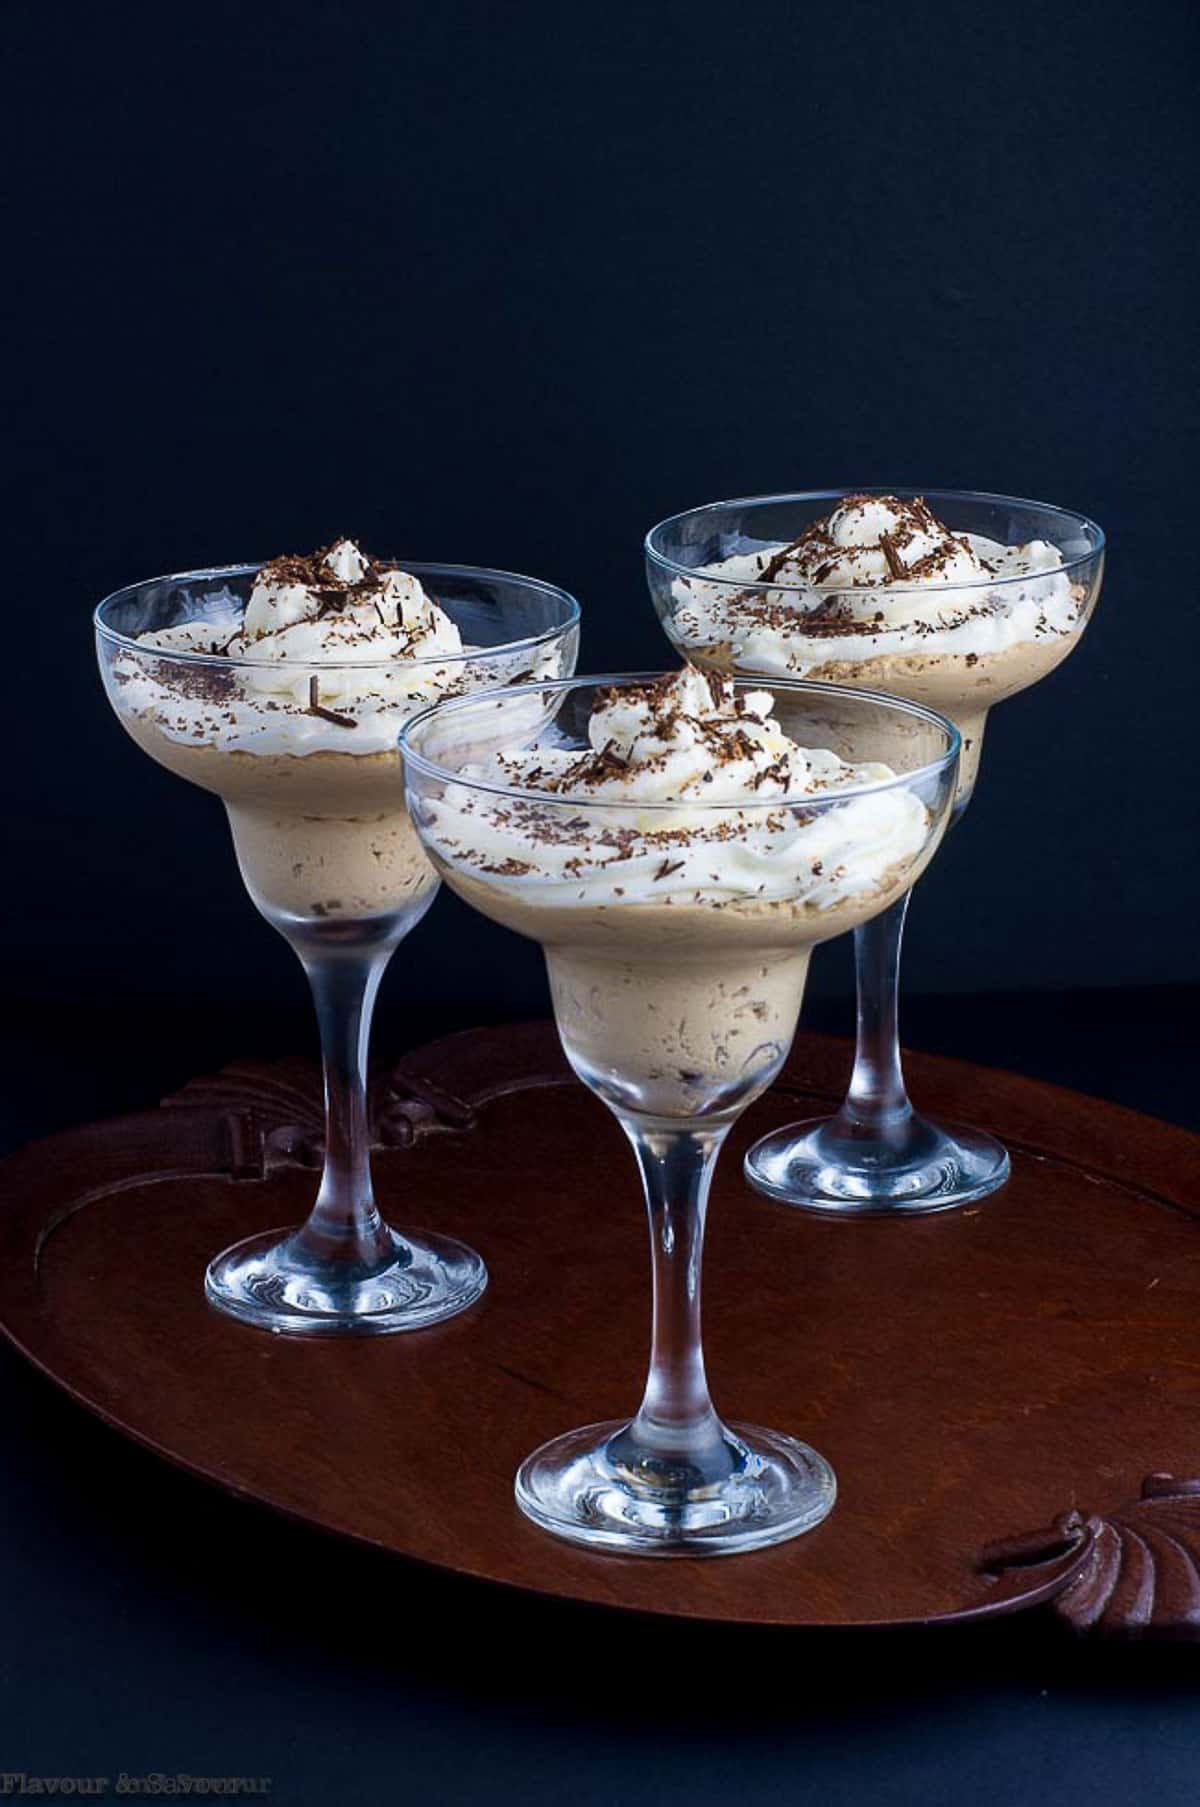 creamy ricotta coffee mousse dessert in stemmed dessert glasses